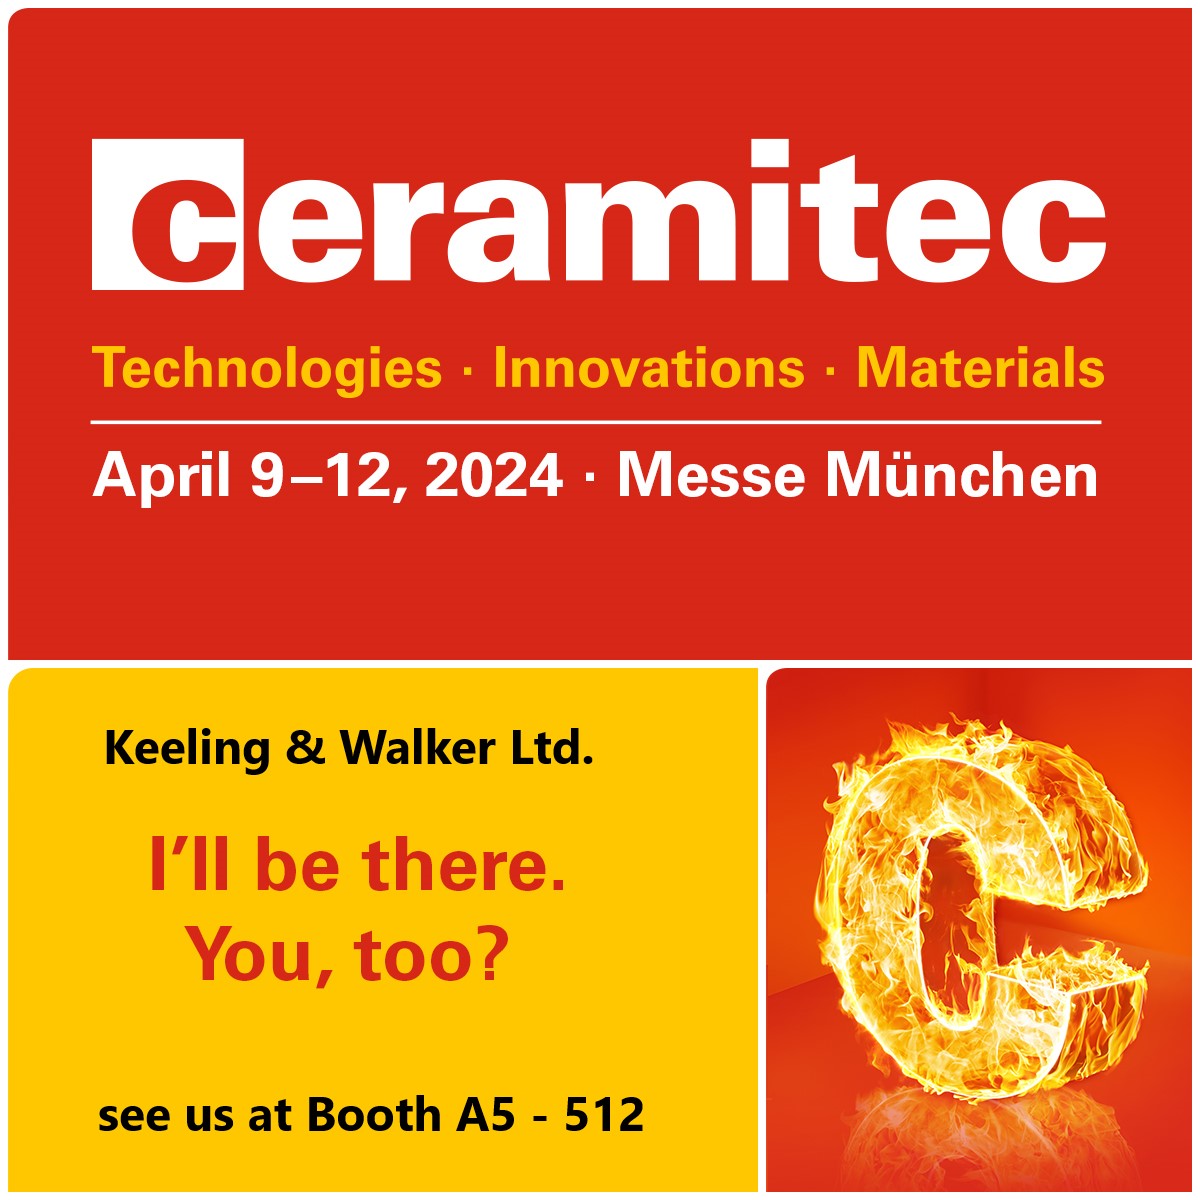 Keeling & Walker to exhibit at Ceramitec 2024